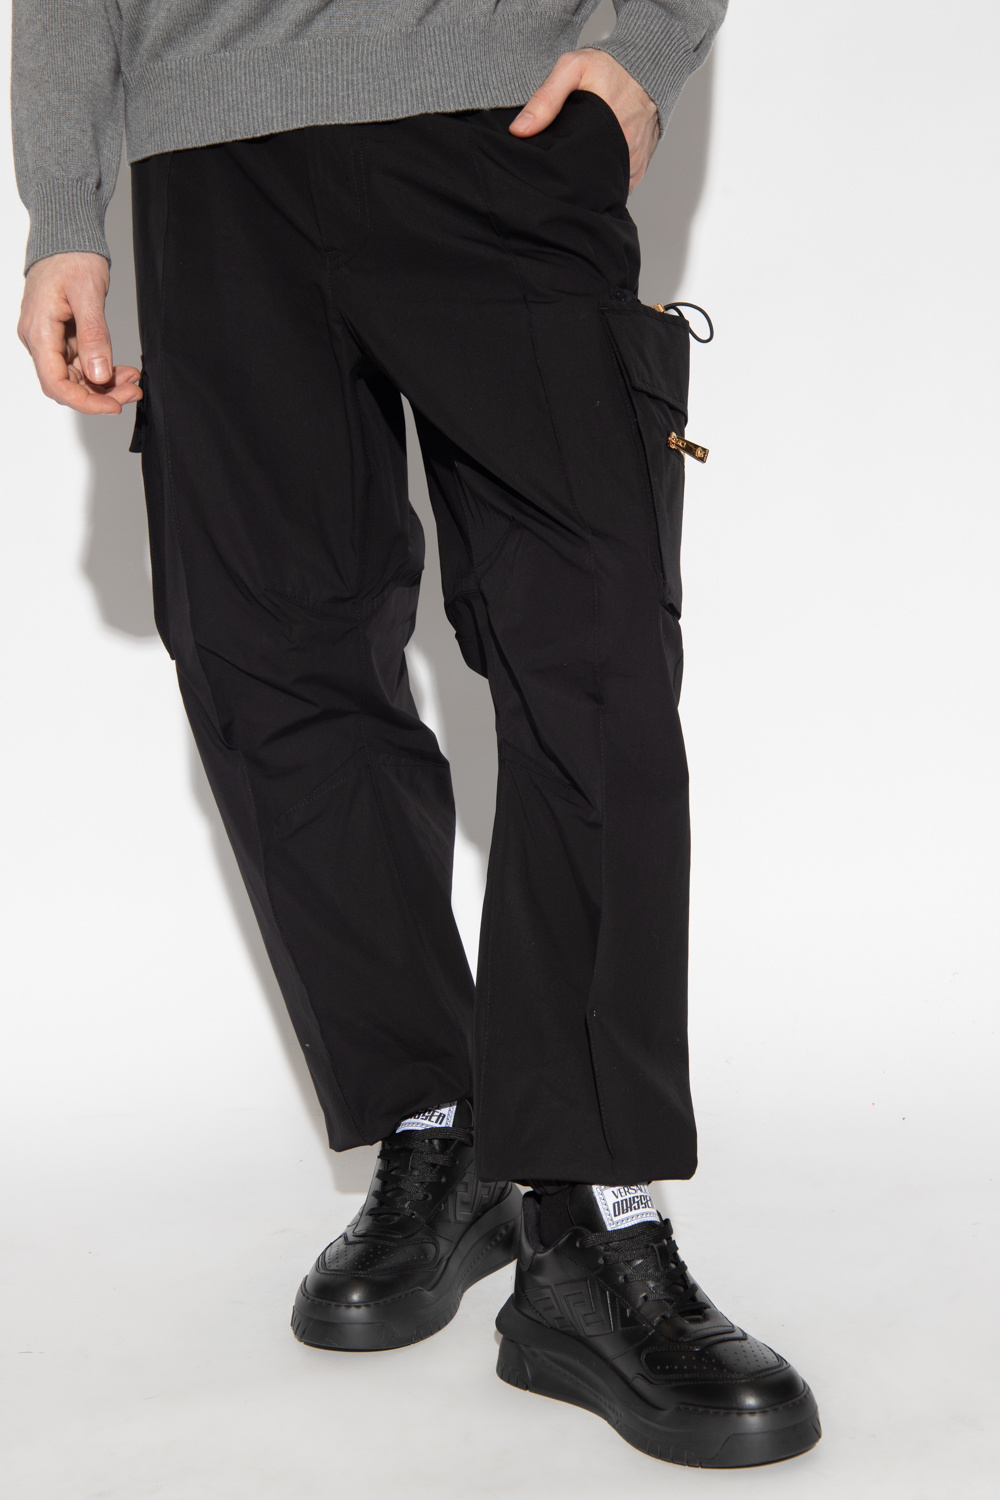 Versace Genny stud-embellished sleeveless midi dress Black